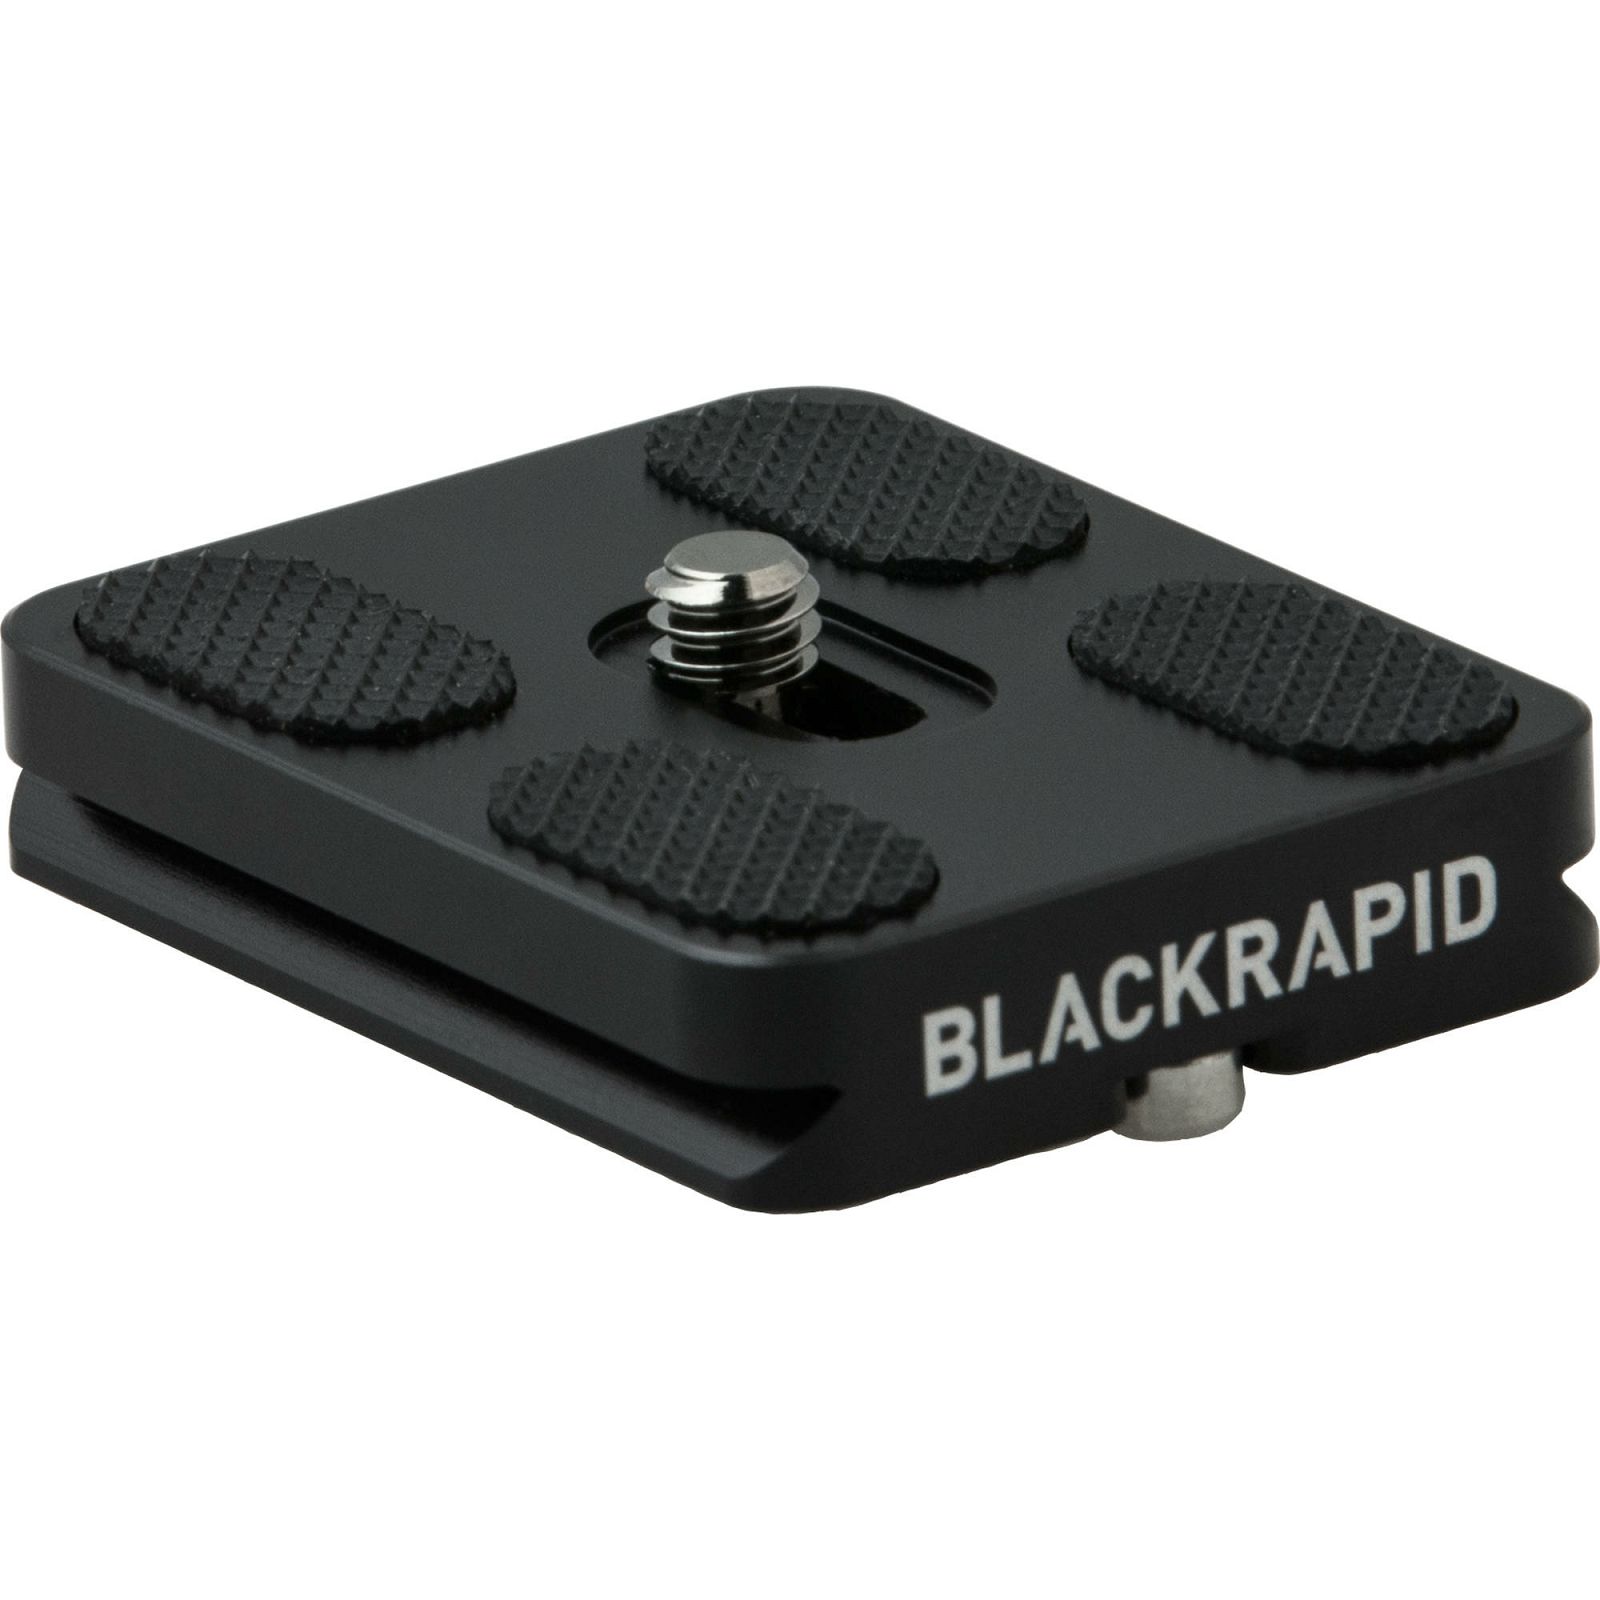 BlackRapid Tripod Plate 50 Quick-Release Plate 50mm (2503001)